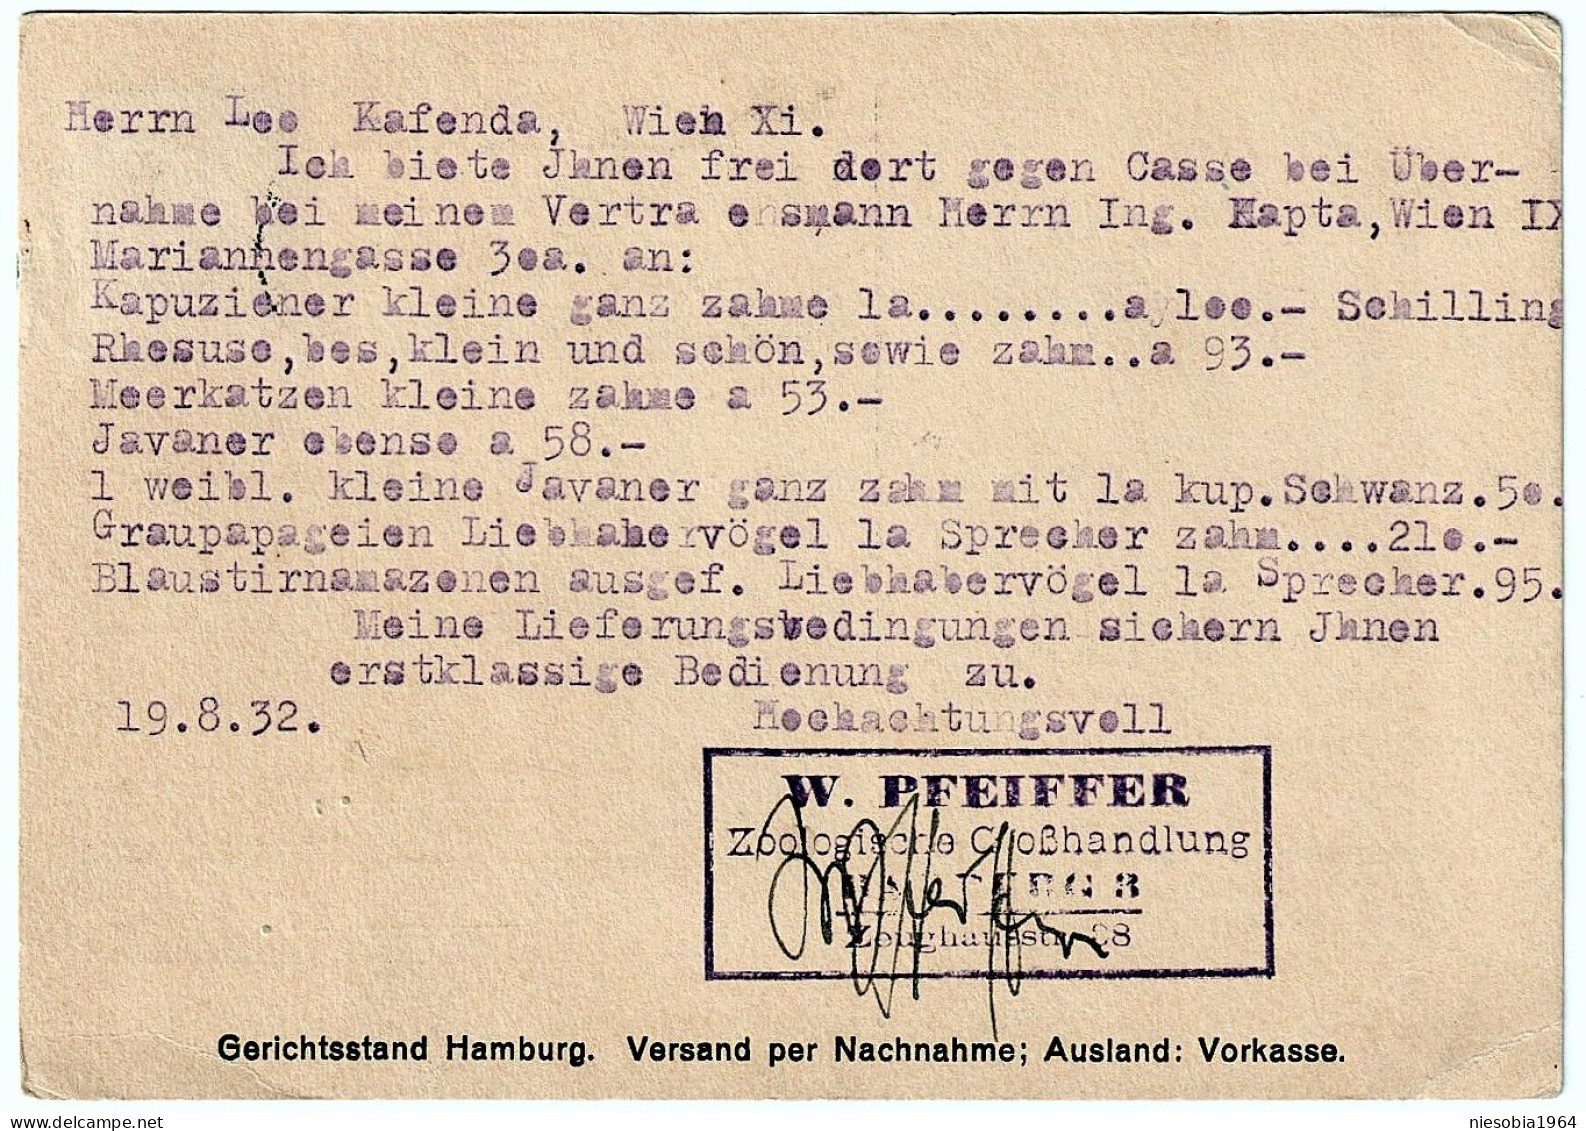 Company Postcard W. Pfeiffer Pet Wholesaler Hamburg. Postage Stamp DR 6, Data Seal 19/08/1932 Avoids Radio Interference - Postkarten